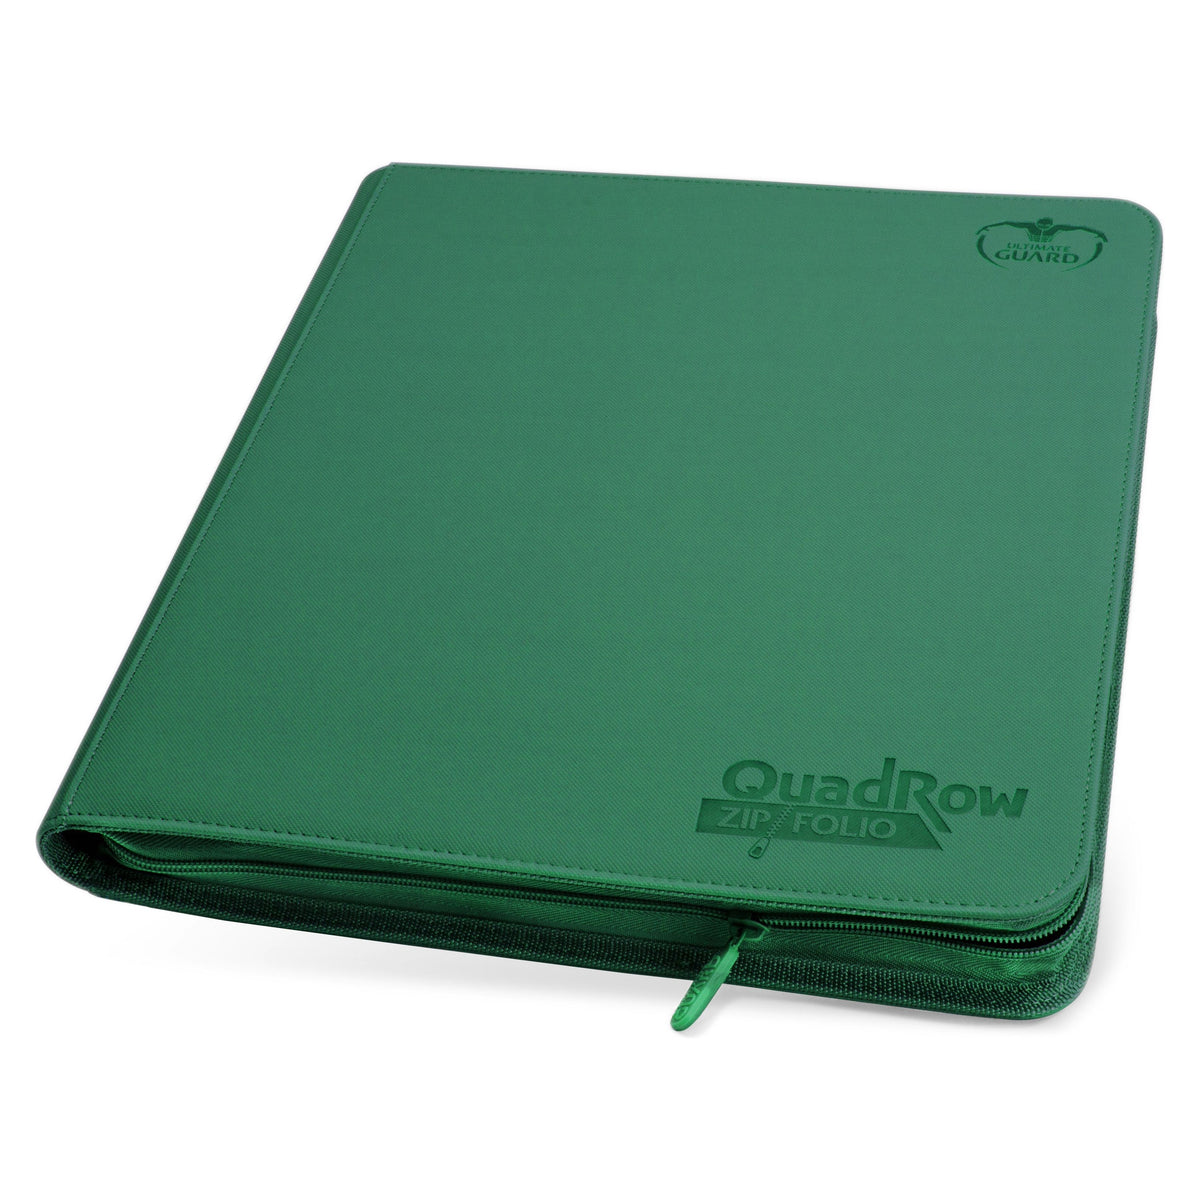 UG12-Pocket QuadRow ZipFolio XenoSkin Green